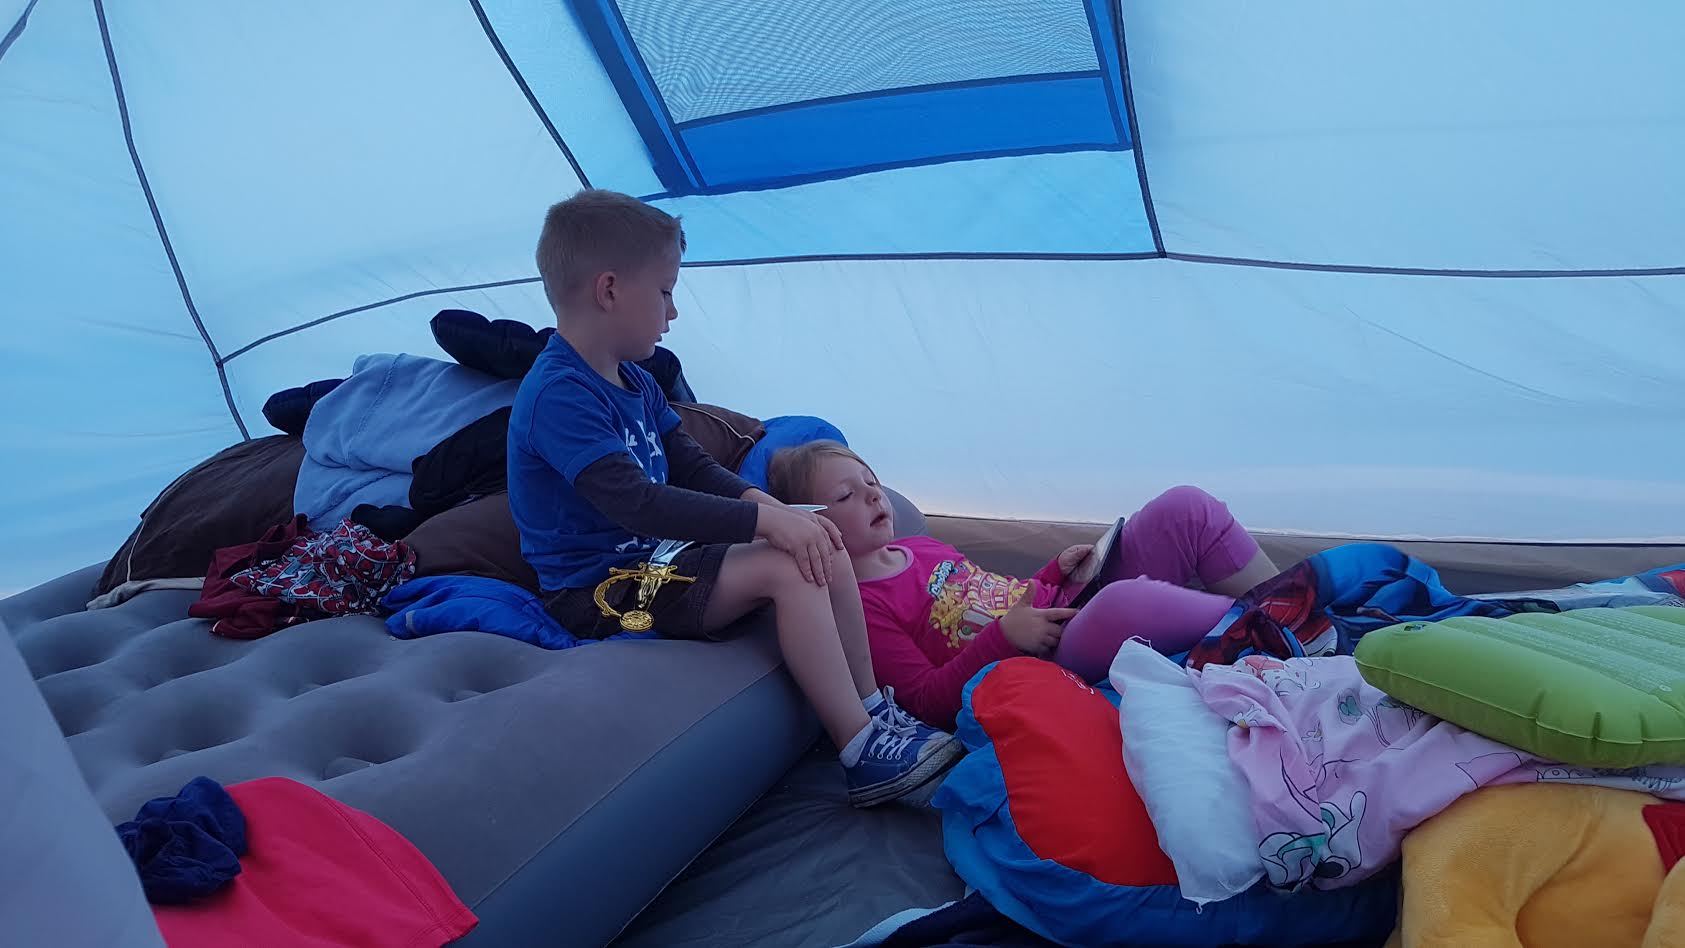 Children inside tent camping